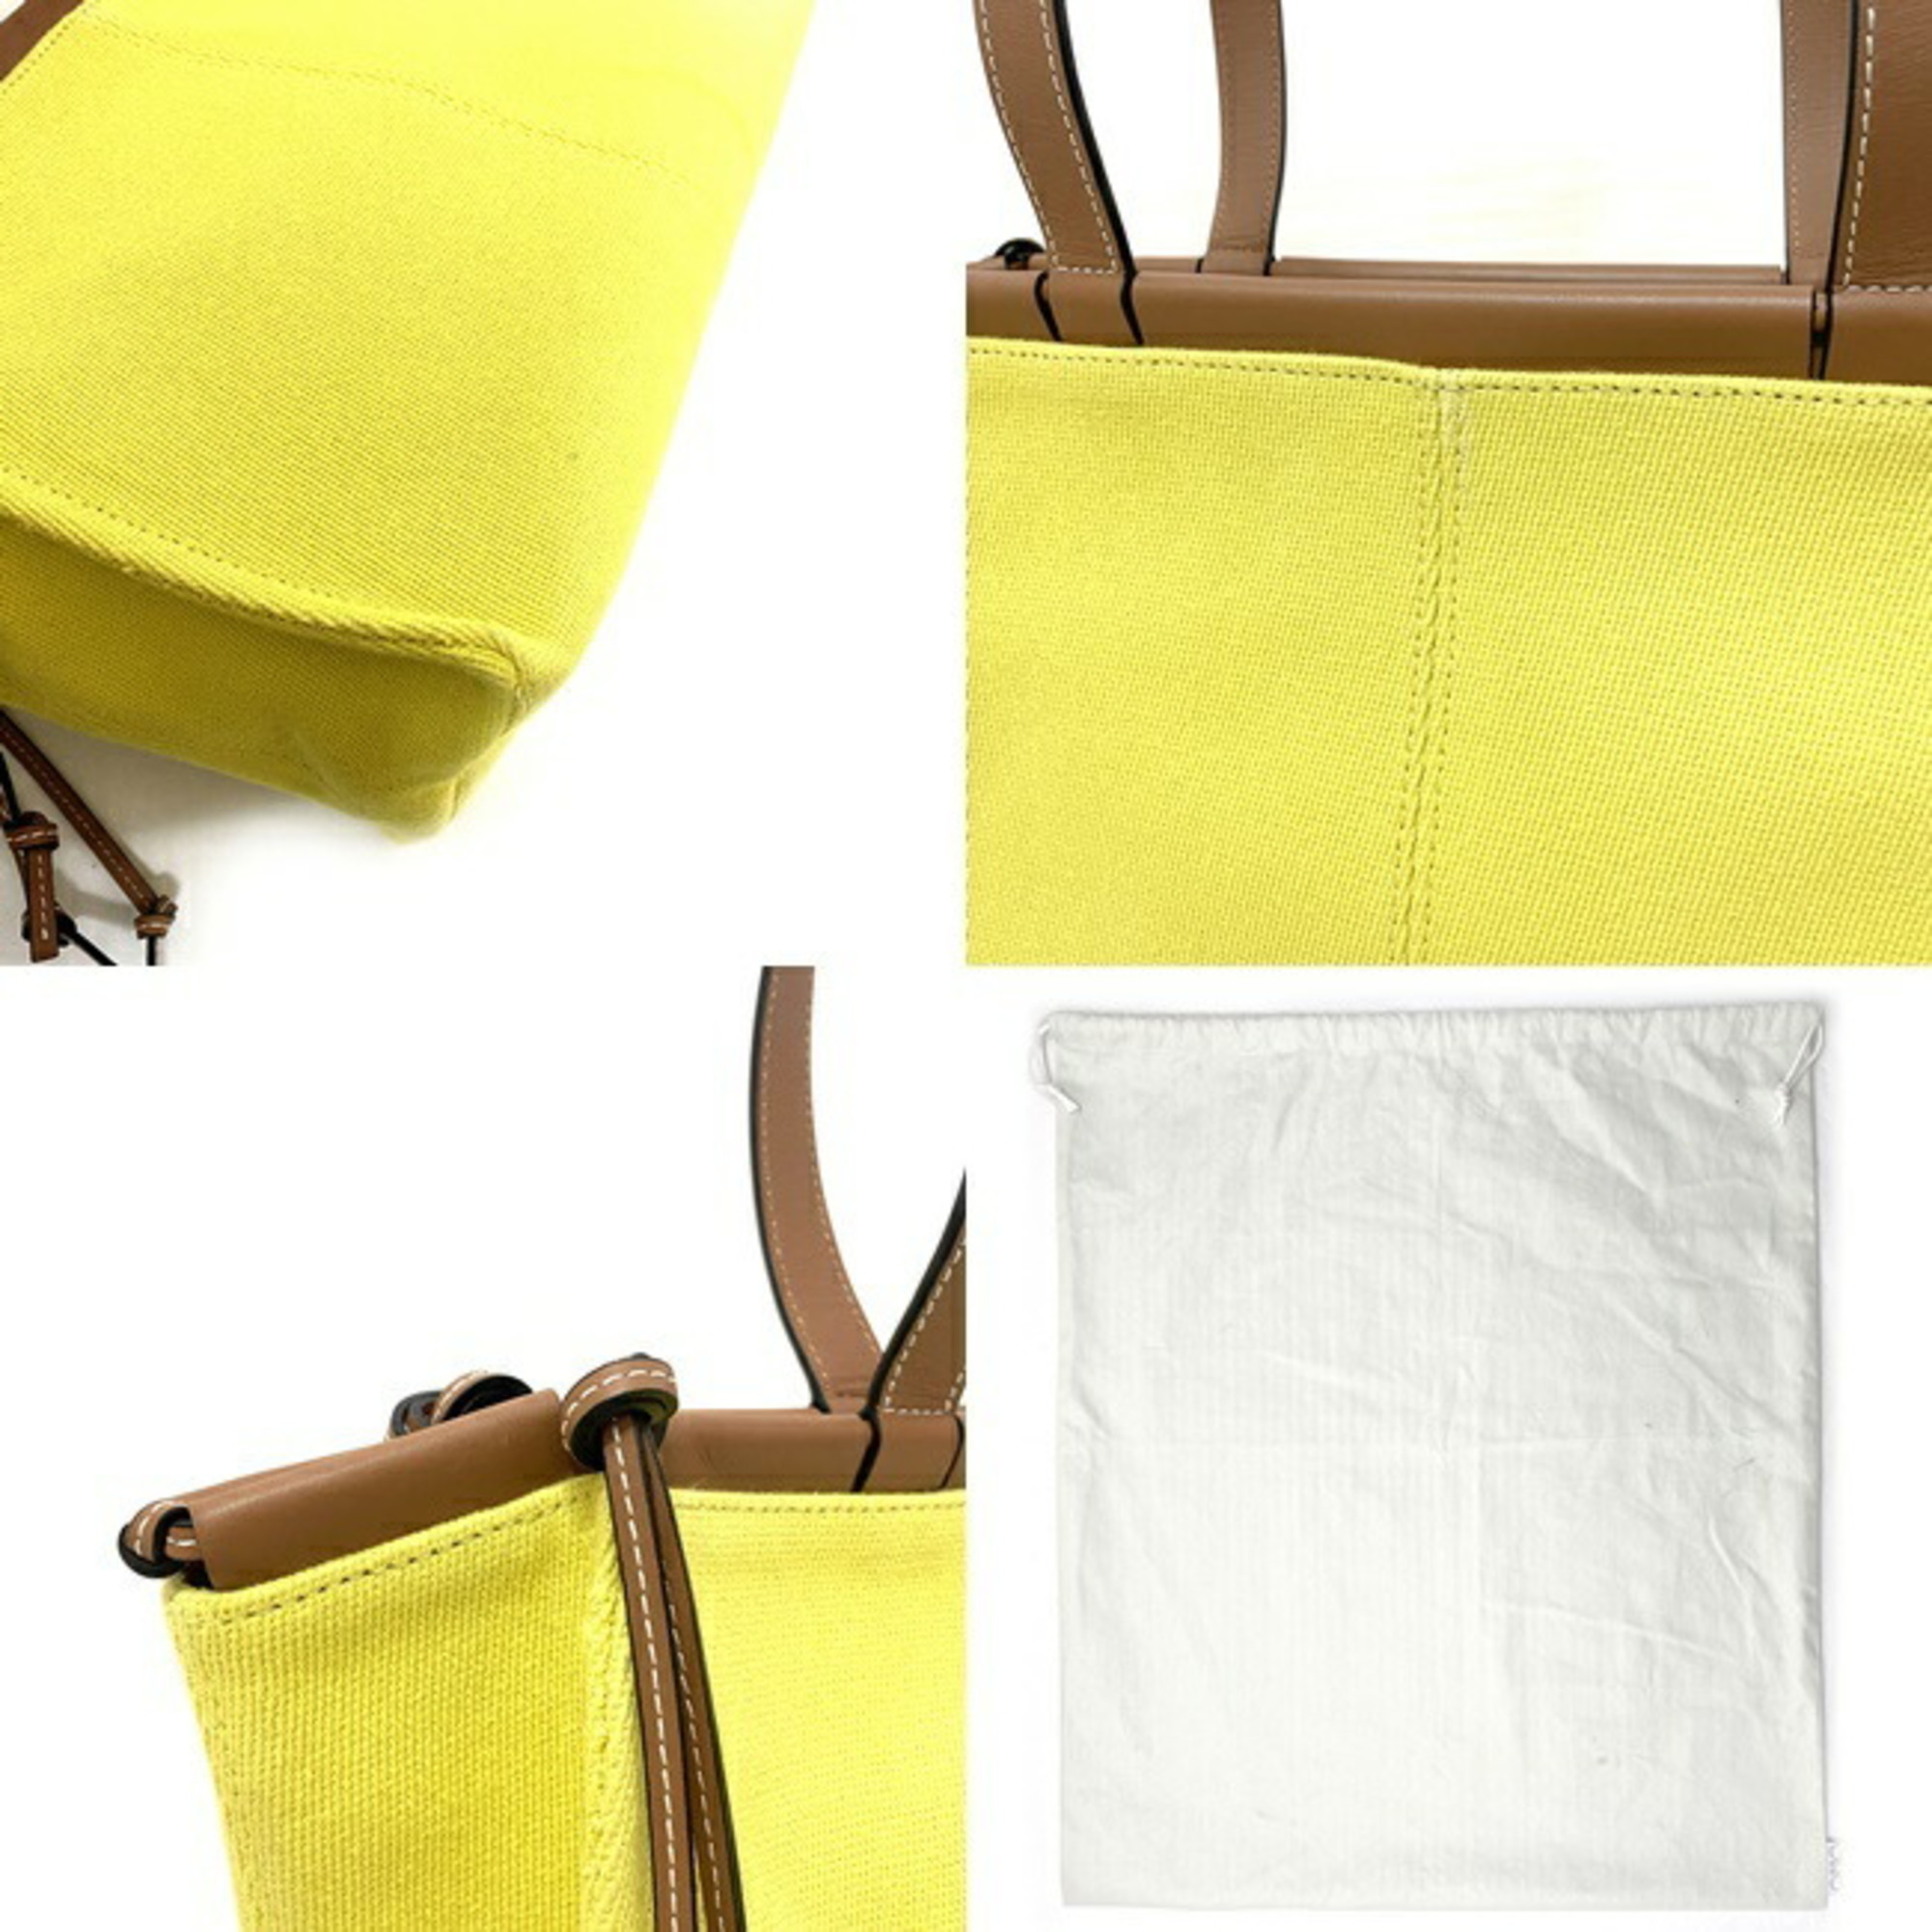 Loewe cushion yellow brown leather patch anagram 330.02AA93 canvas LOEWE tote bag